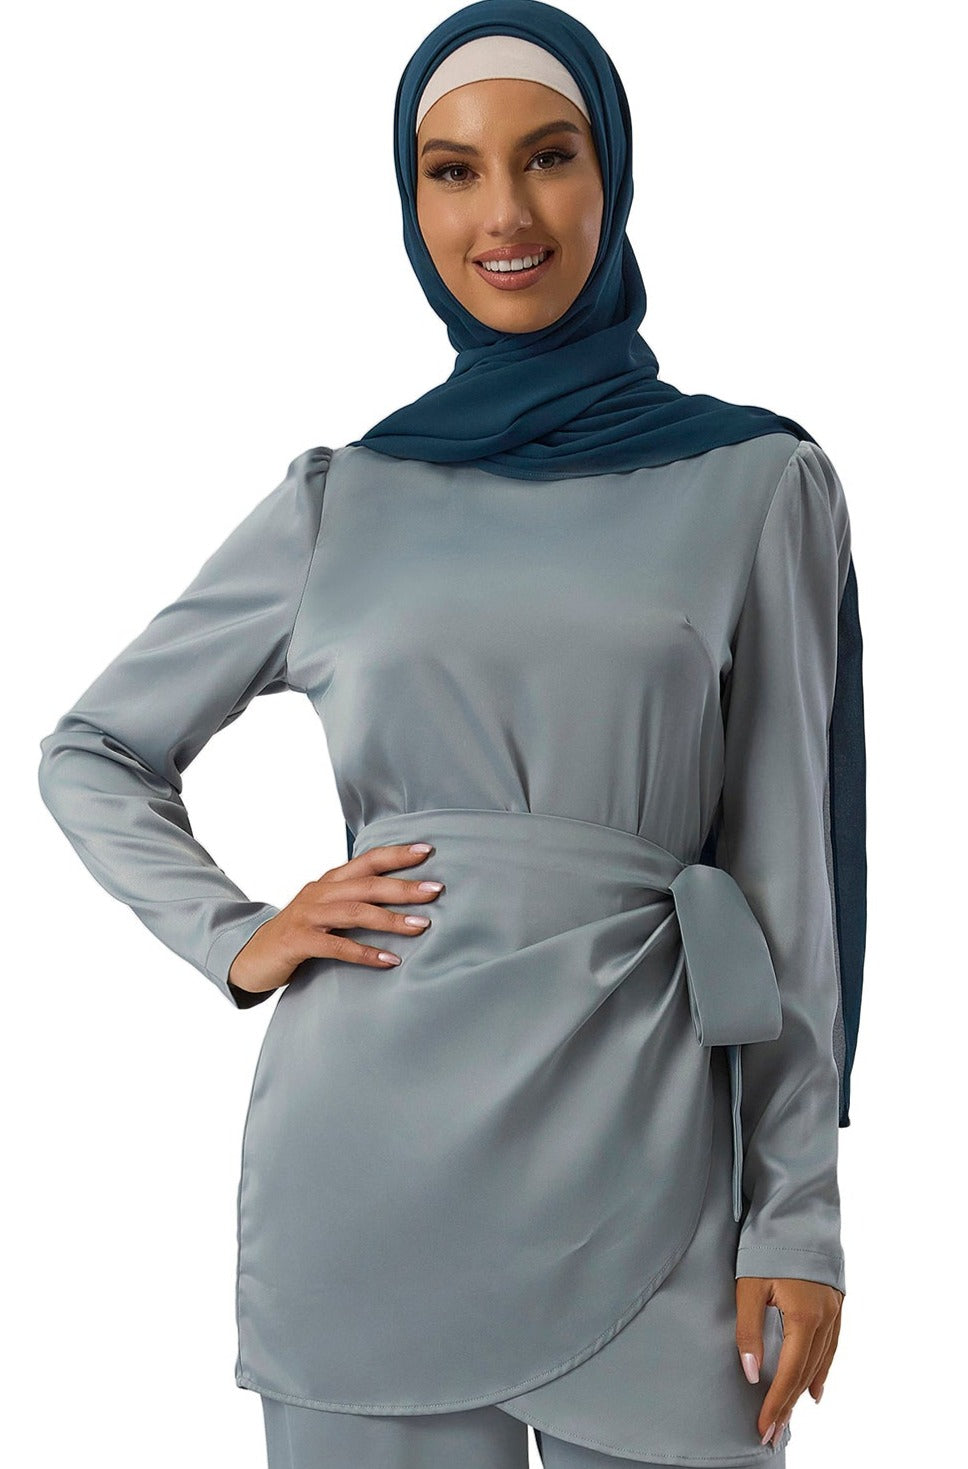 Urban Modesty - Dark Emerald Chiffon Hijab